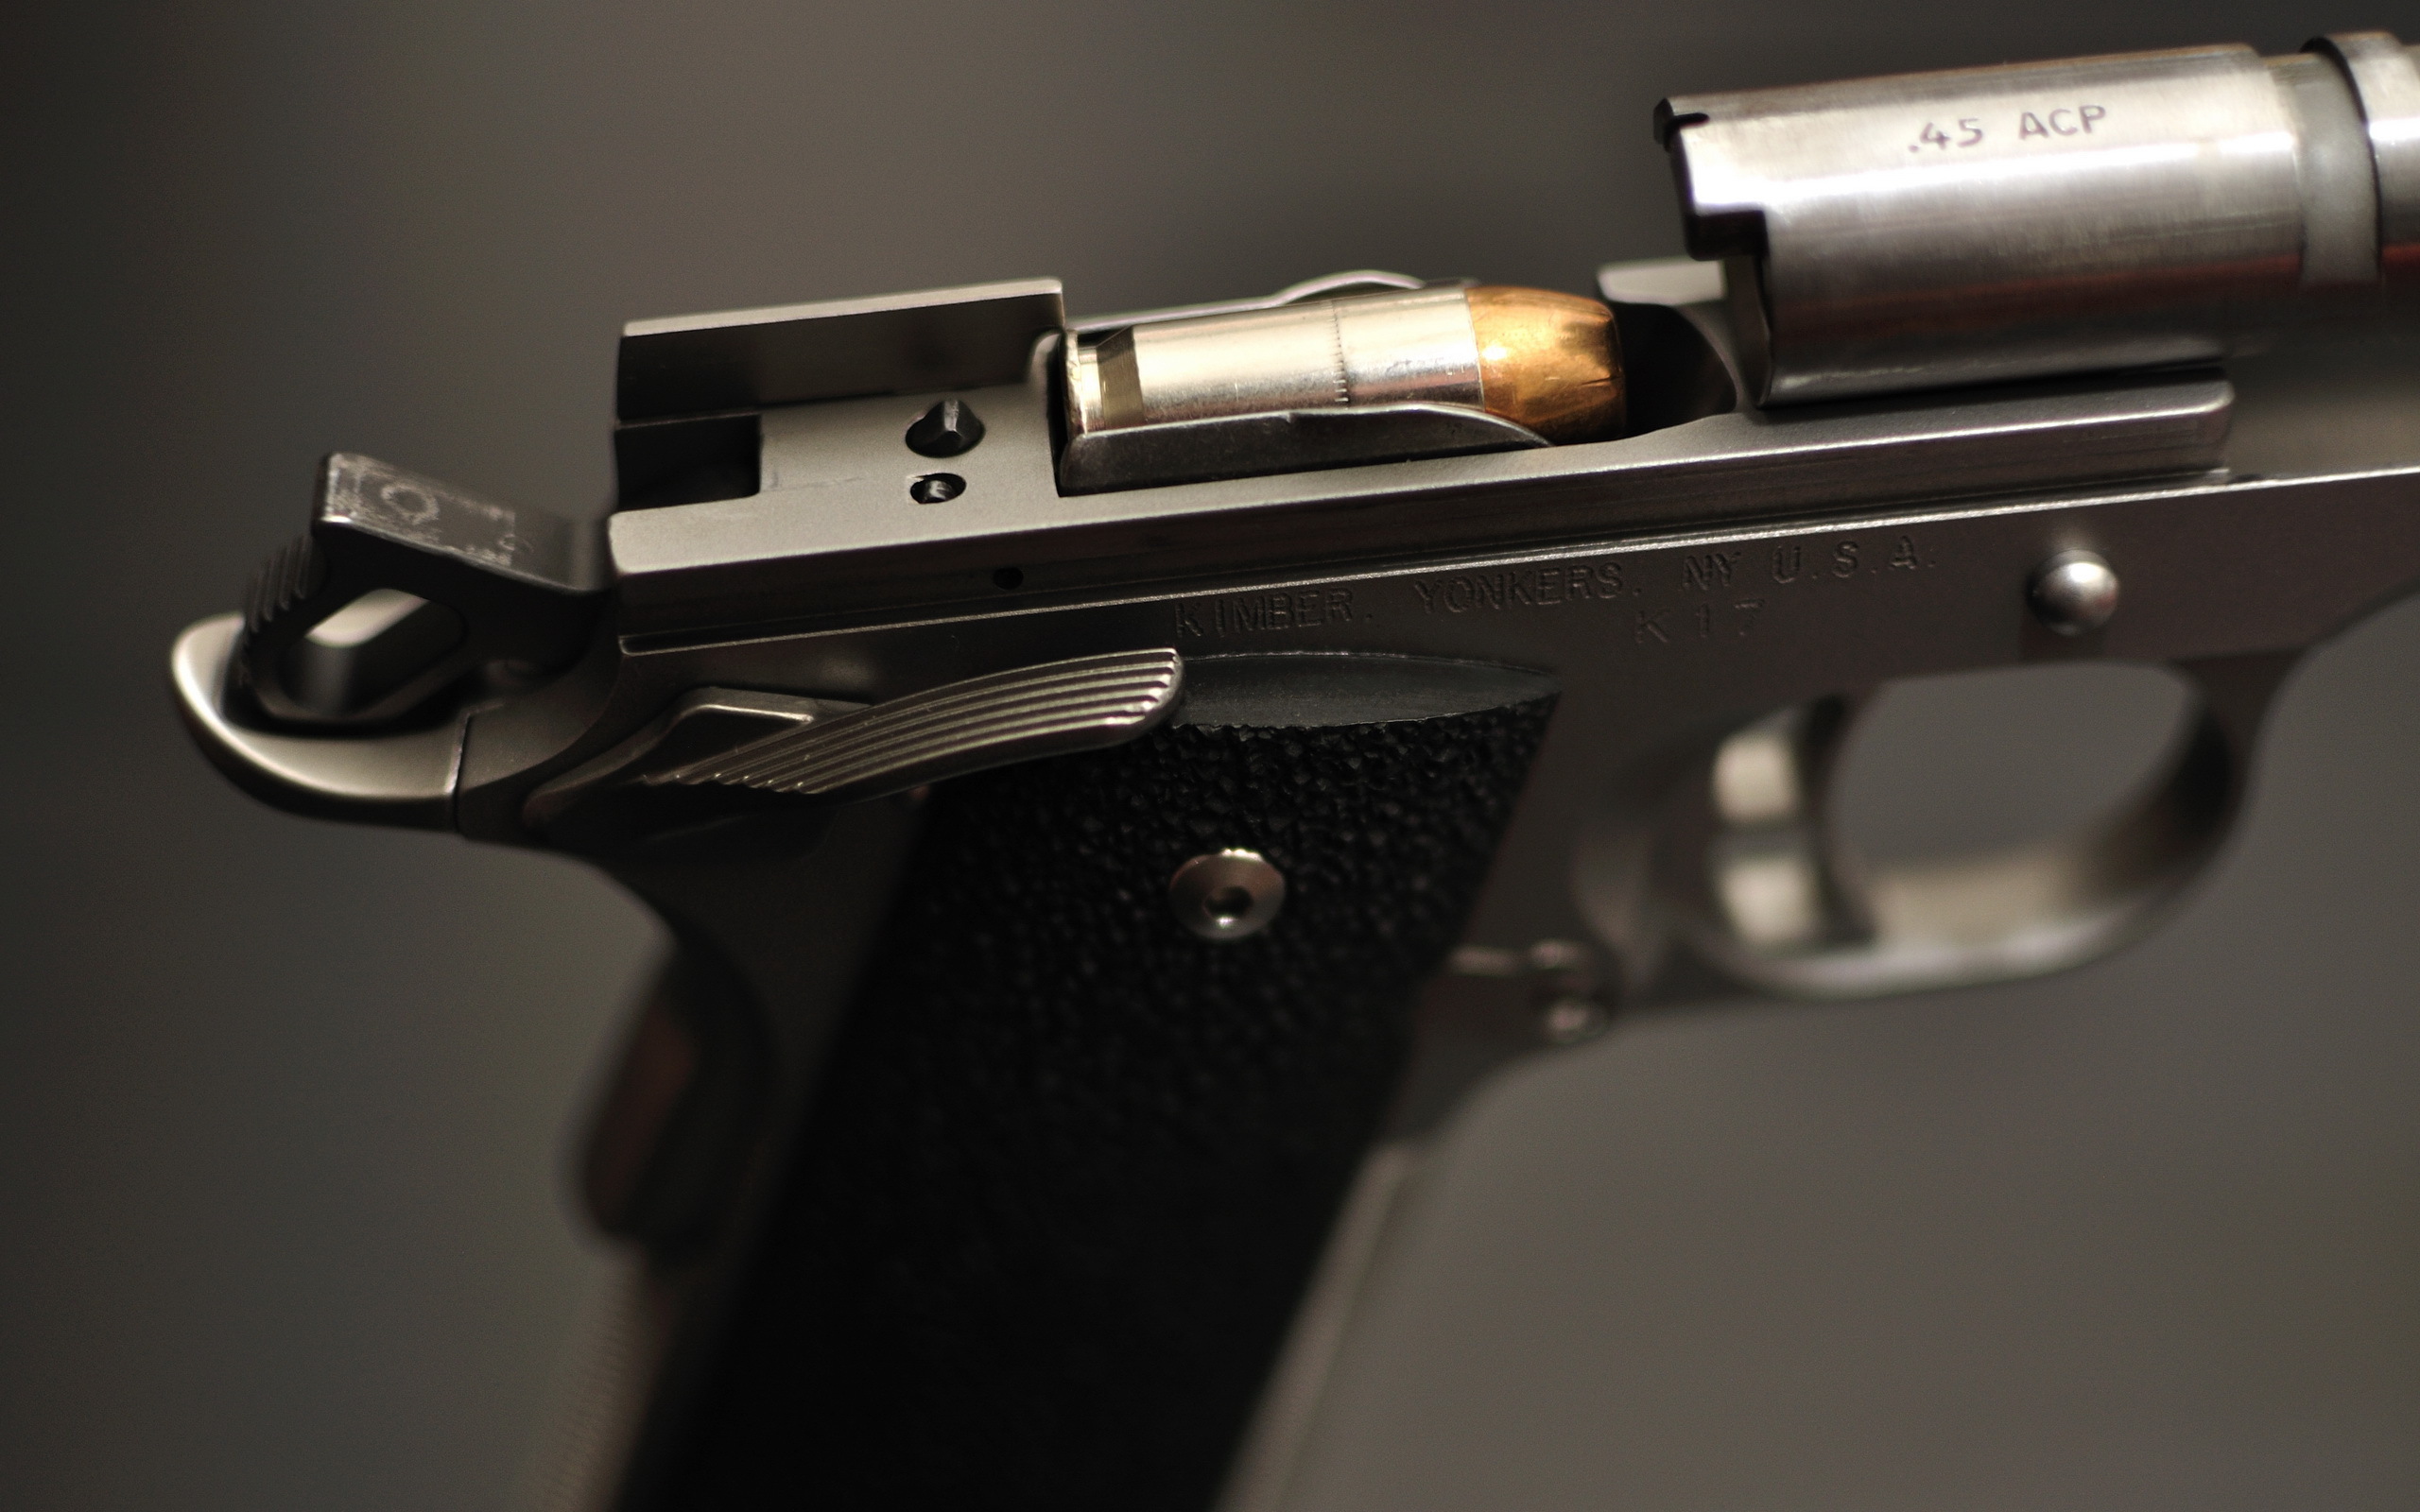 Weapons Kimber Pistol 2560x1600